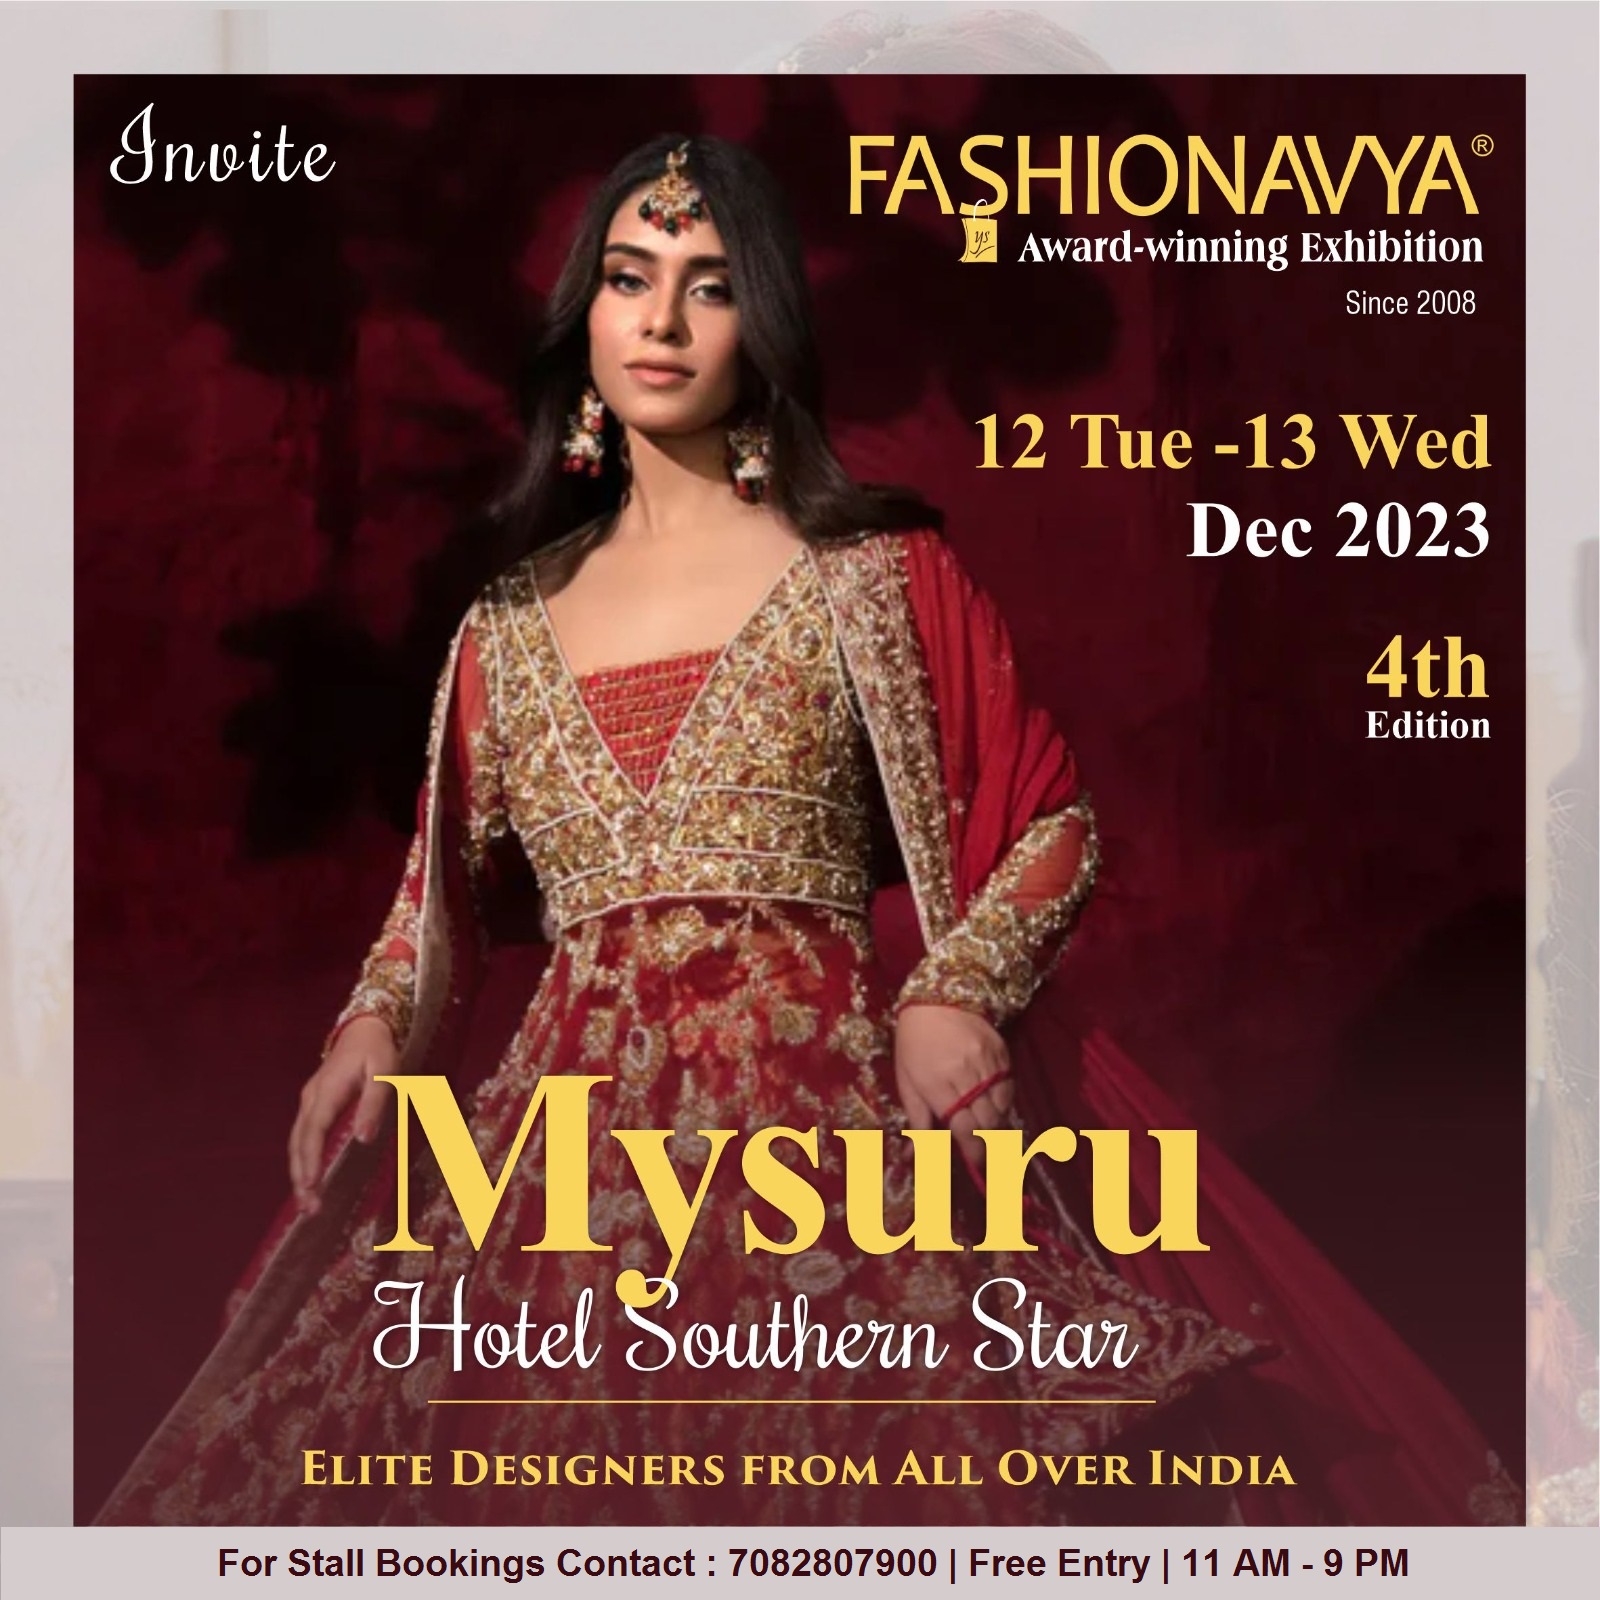 Fashionista - Diwali Special Exhibition